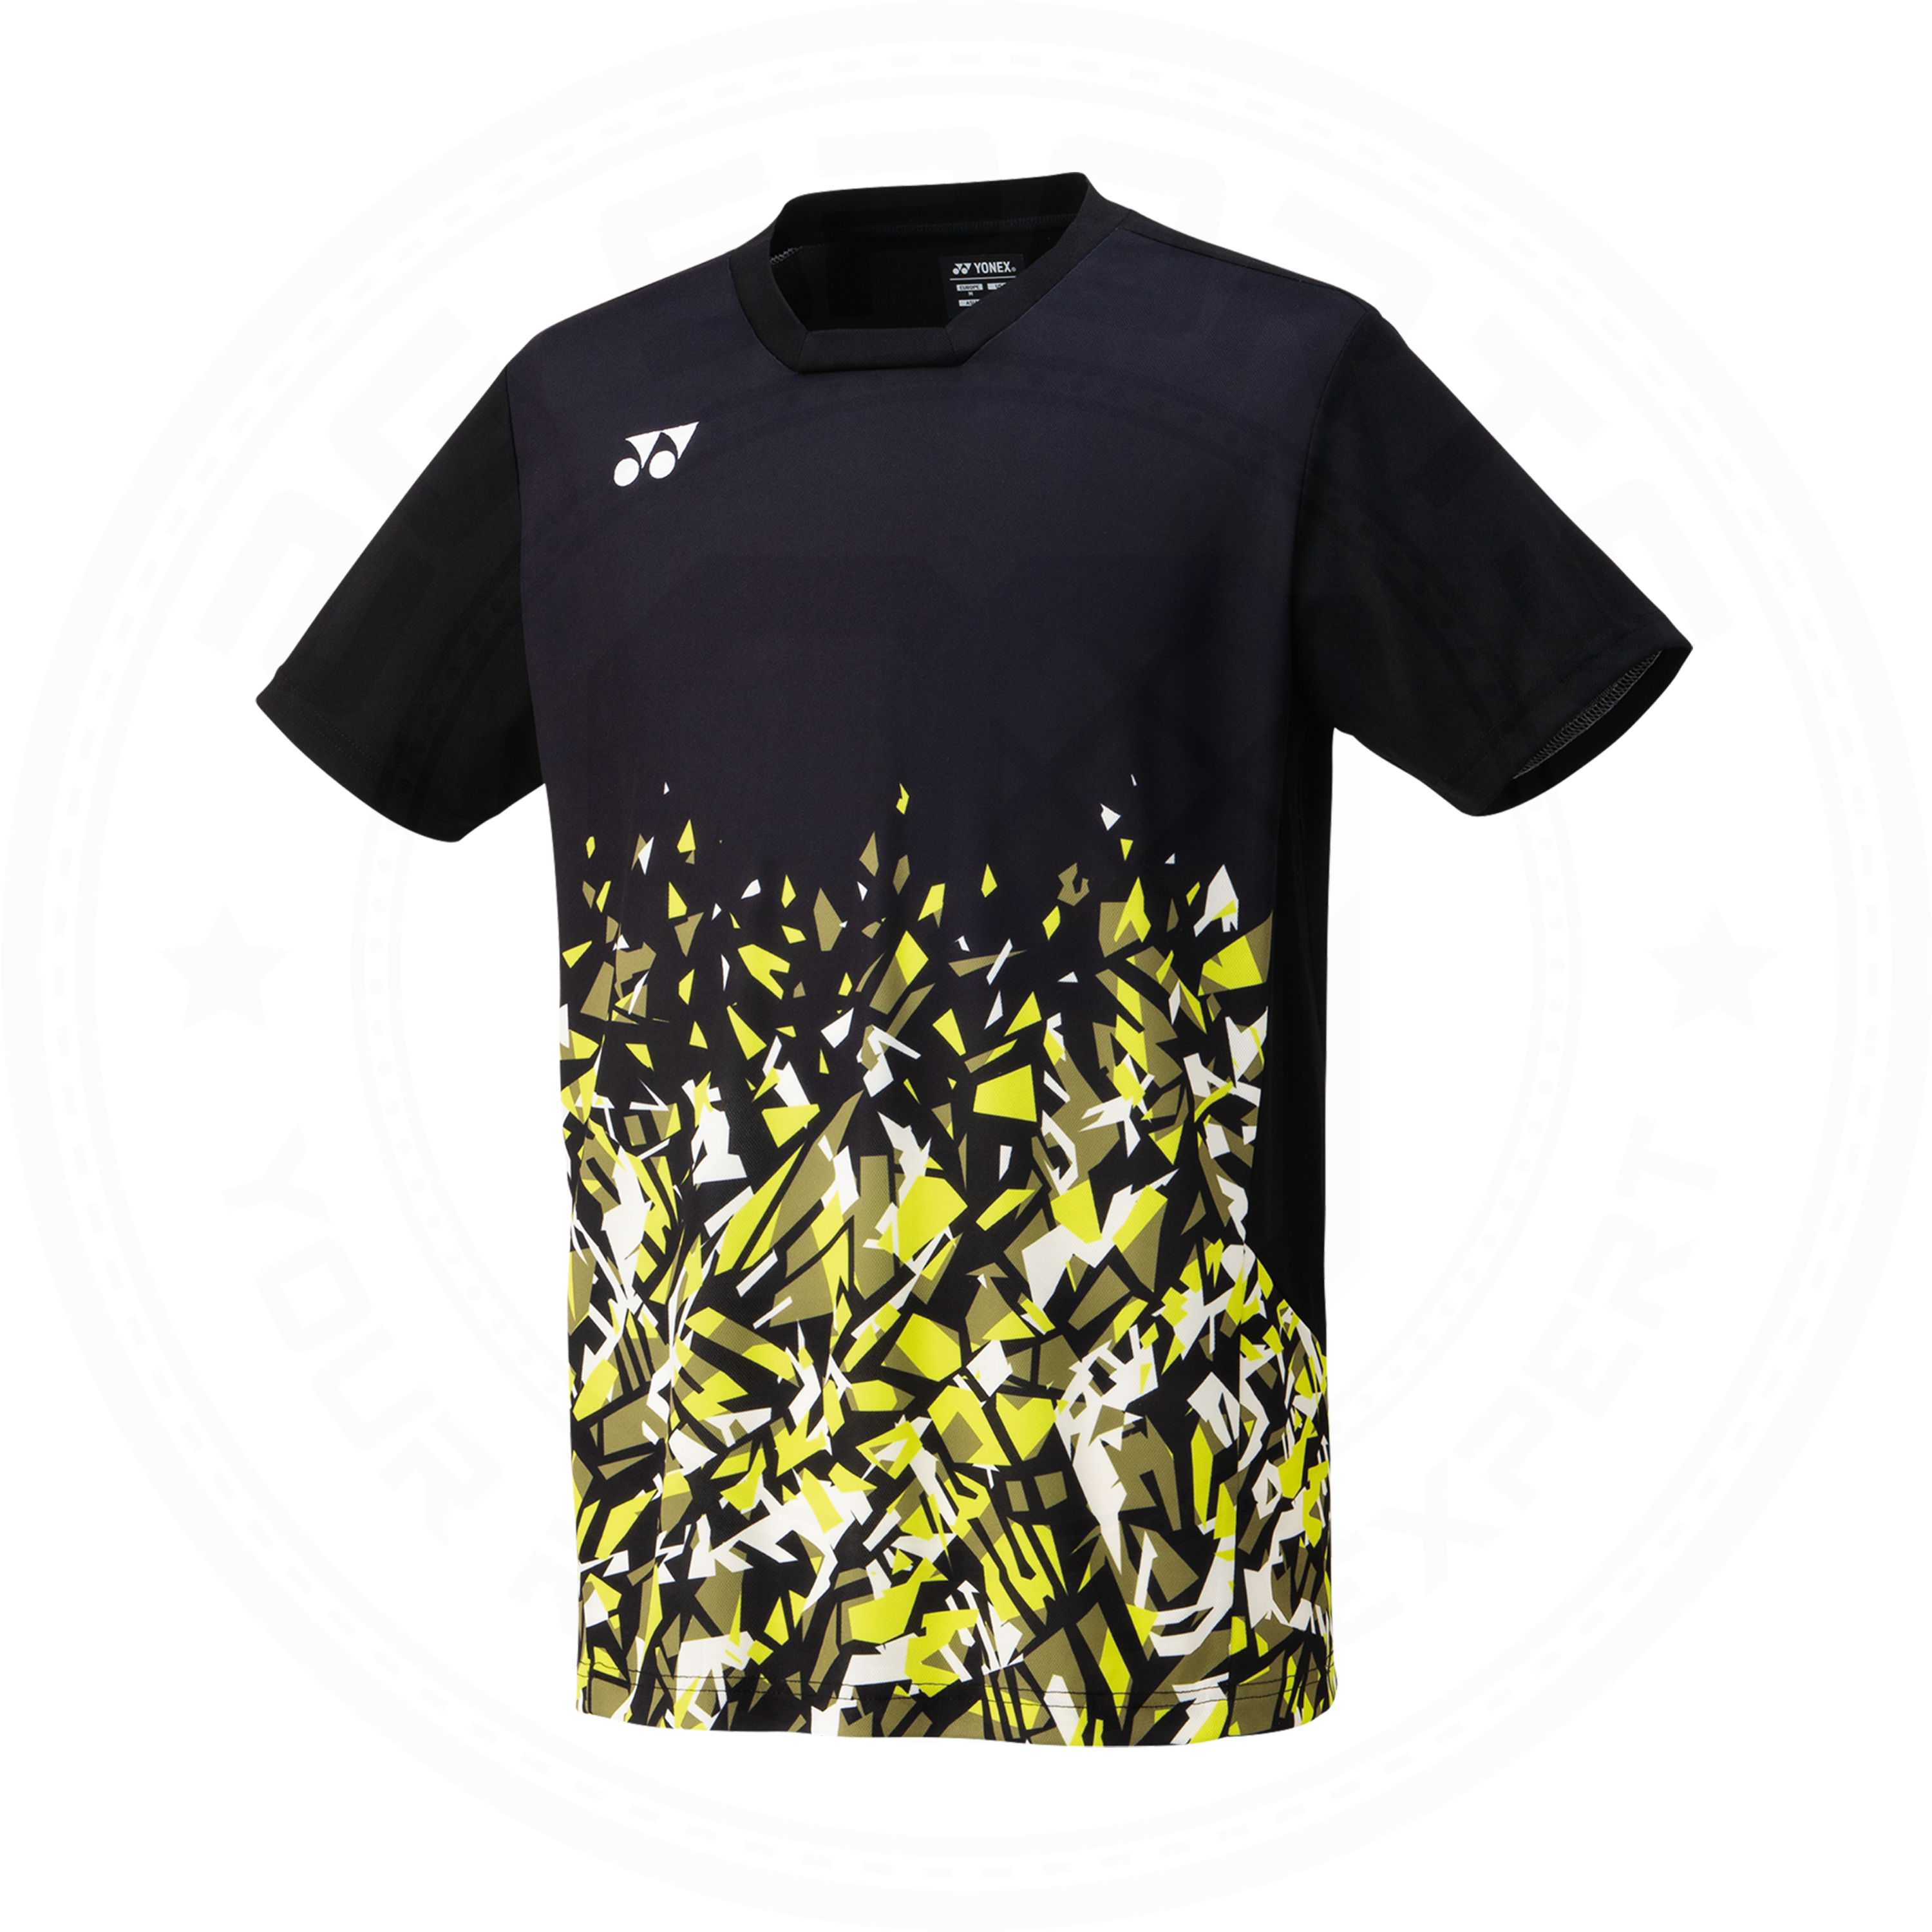 Yonex Japan National Badminton/ Sports Shirt 10551EX Black/ Yellow UNISEX (Clearance)